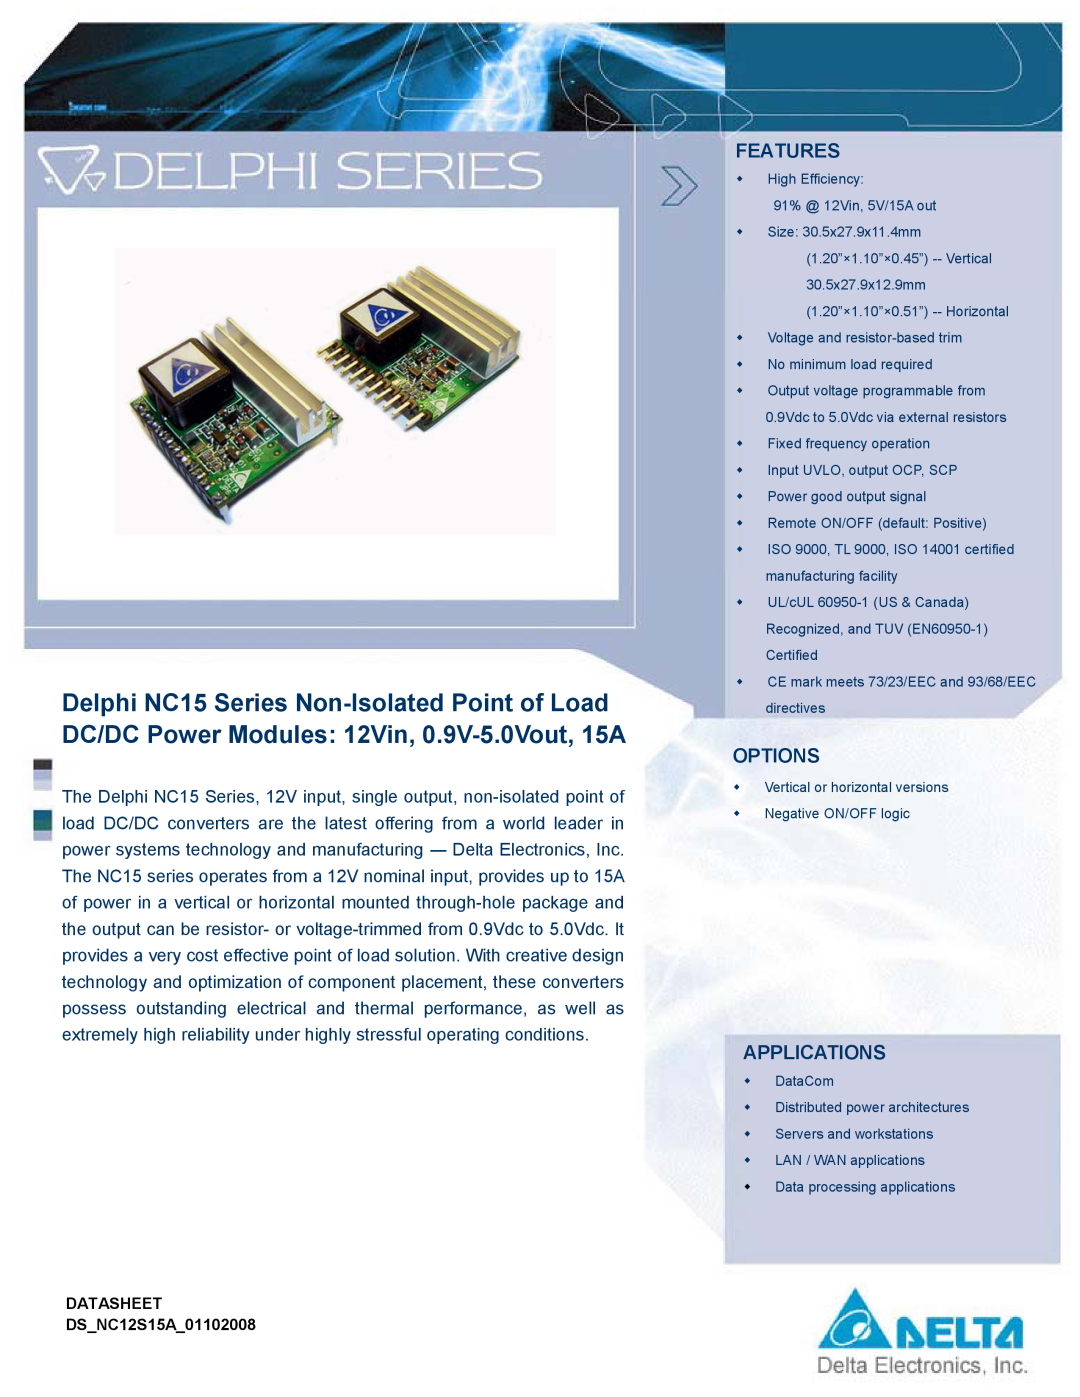 Delta Electronics NC15 Series manual Features, Options, Applications, DATASHEET DSNC12S15A01102008 